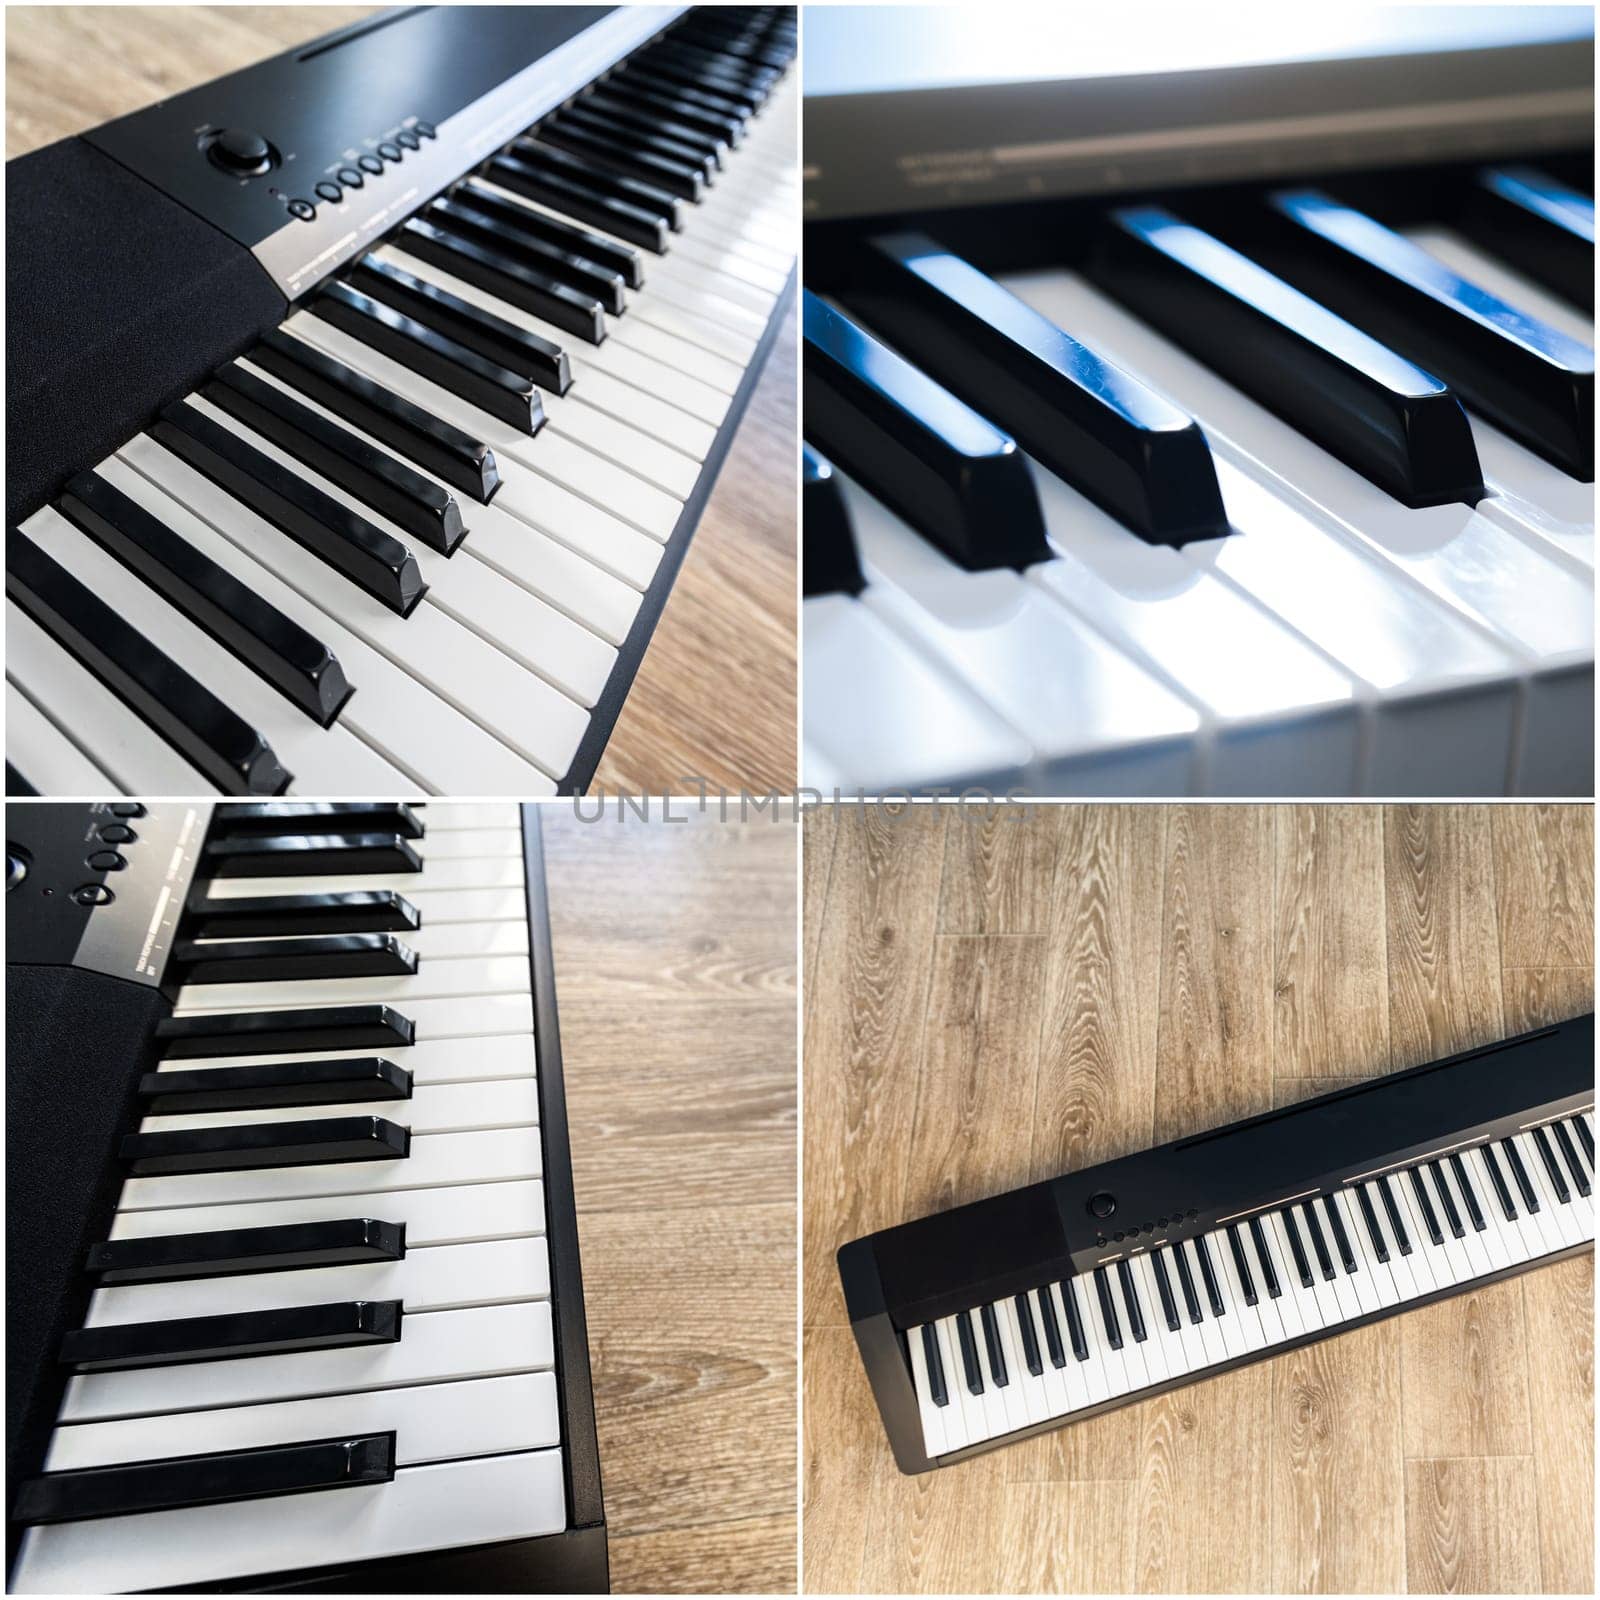 Piano and Piano keyboard by Fabrikasimf